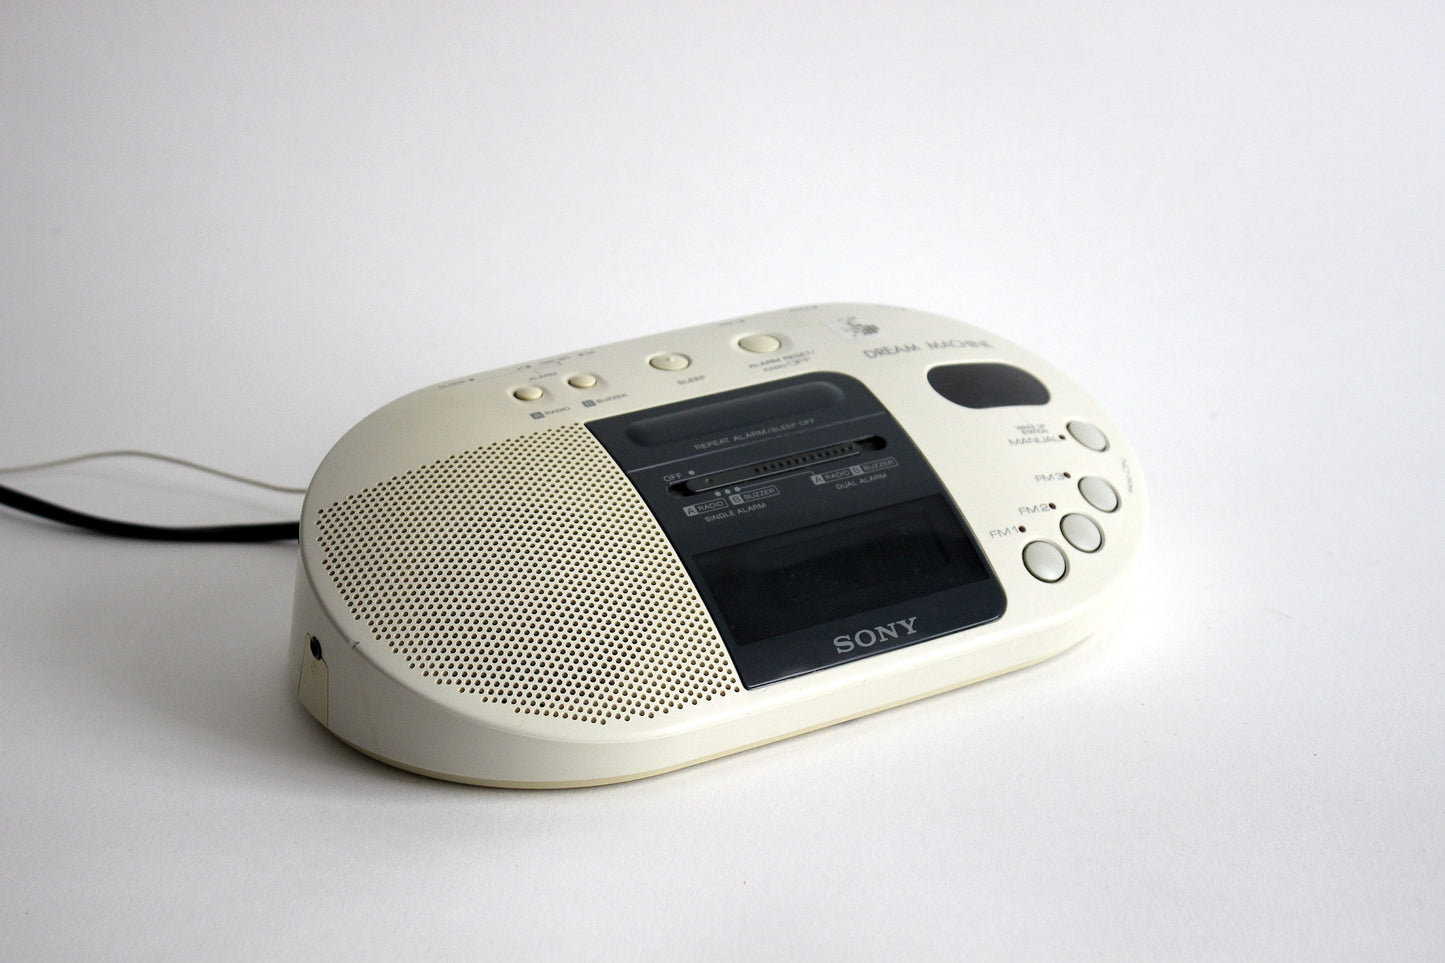 Vintage Sony Dream Machine Alarm Clock Radio (Model ICF-C730)